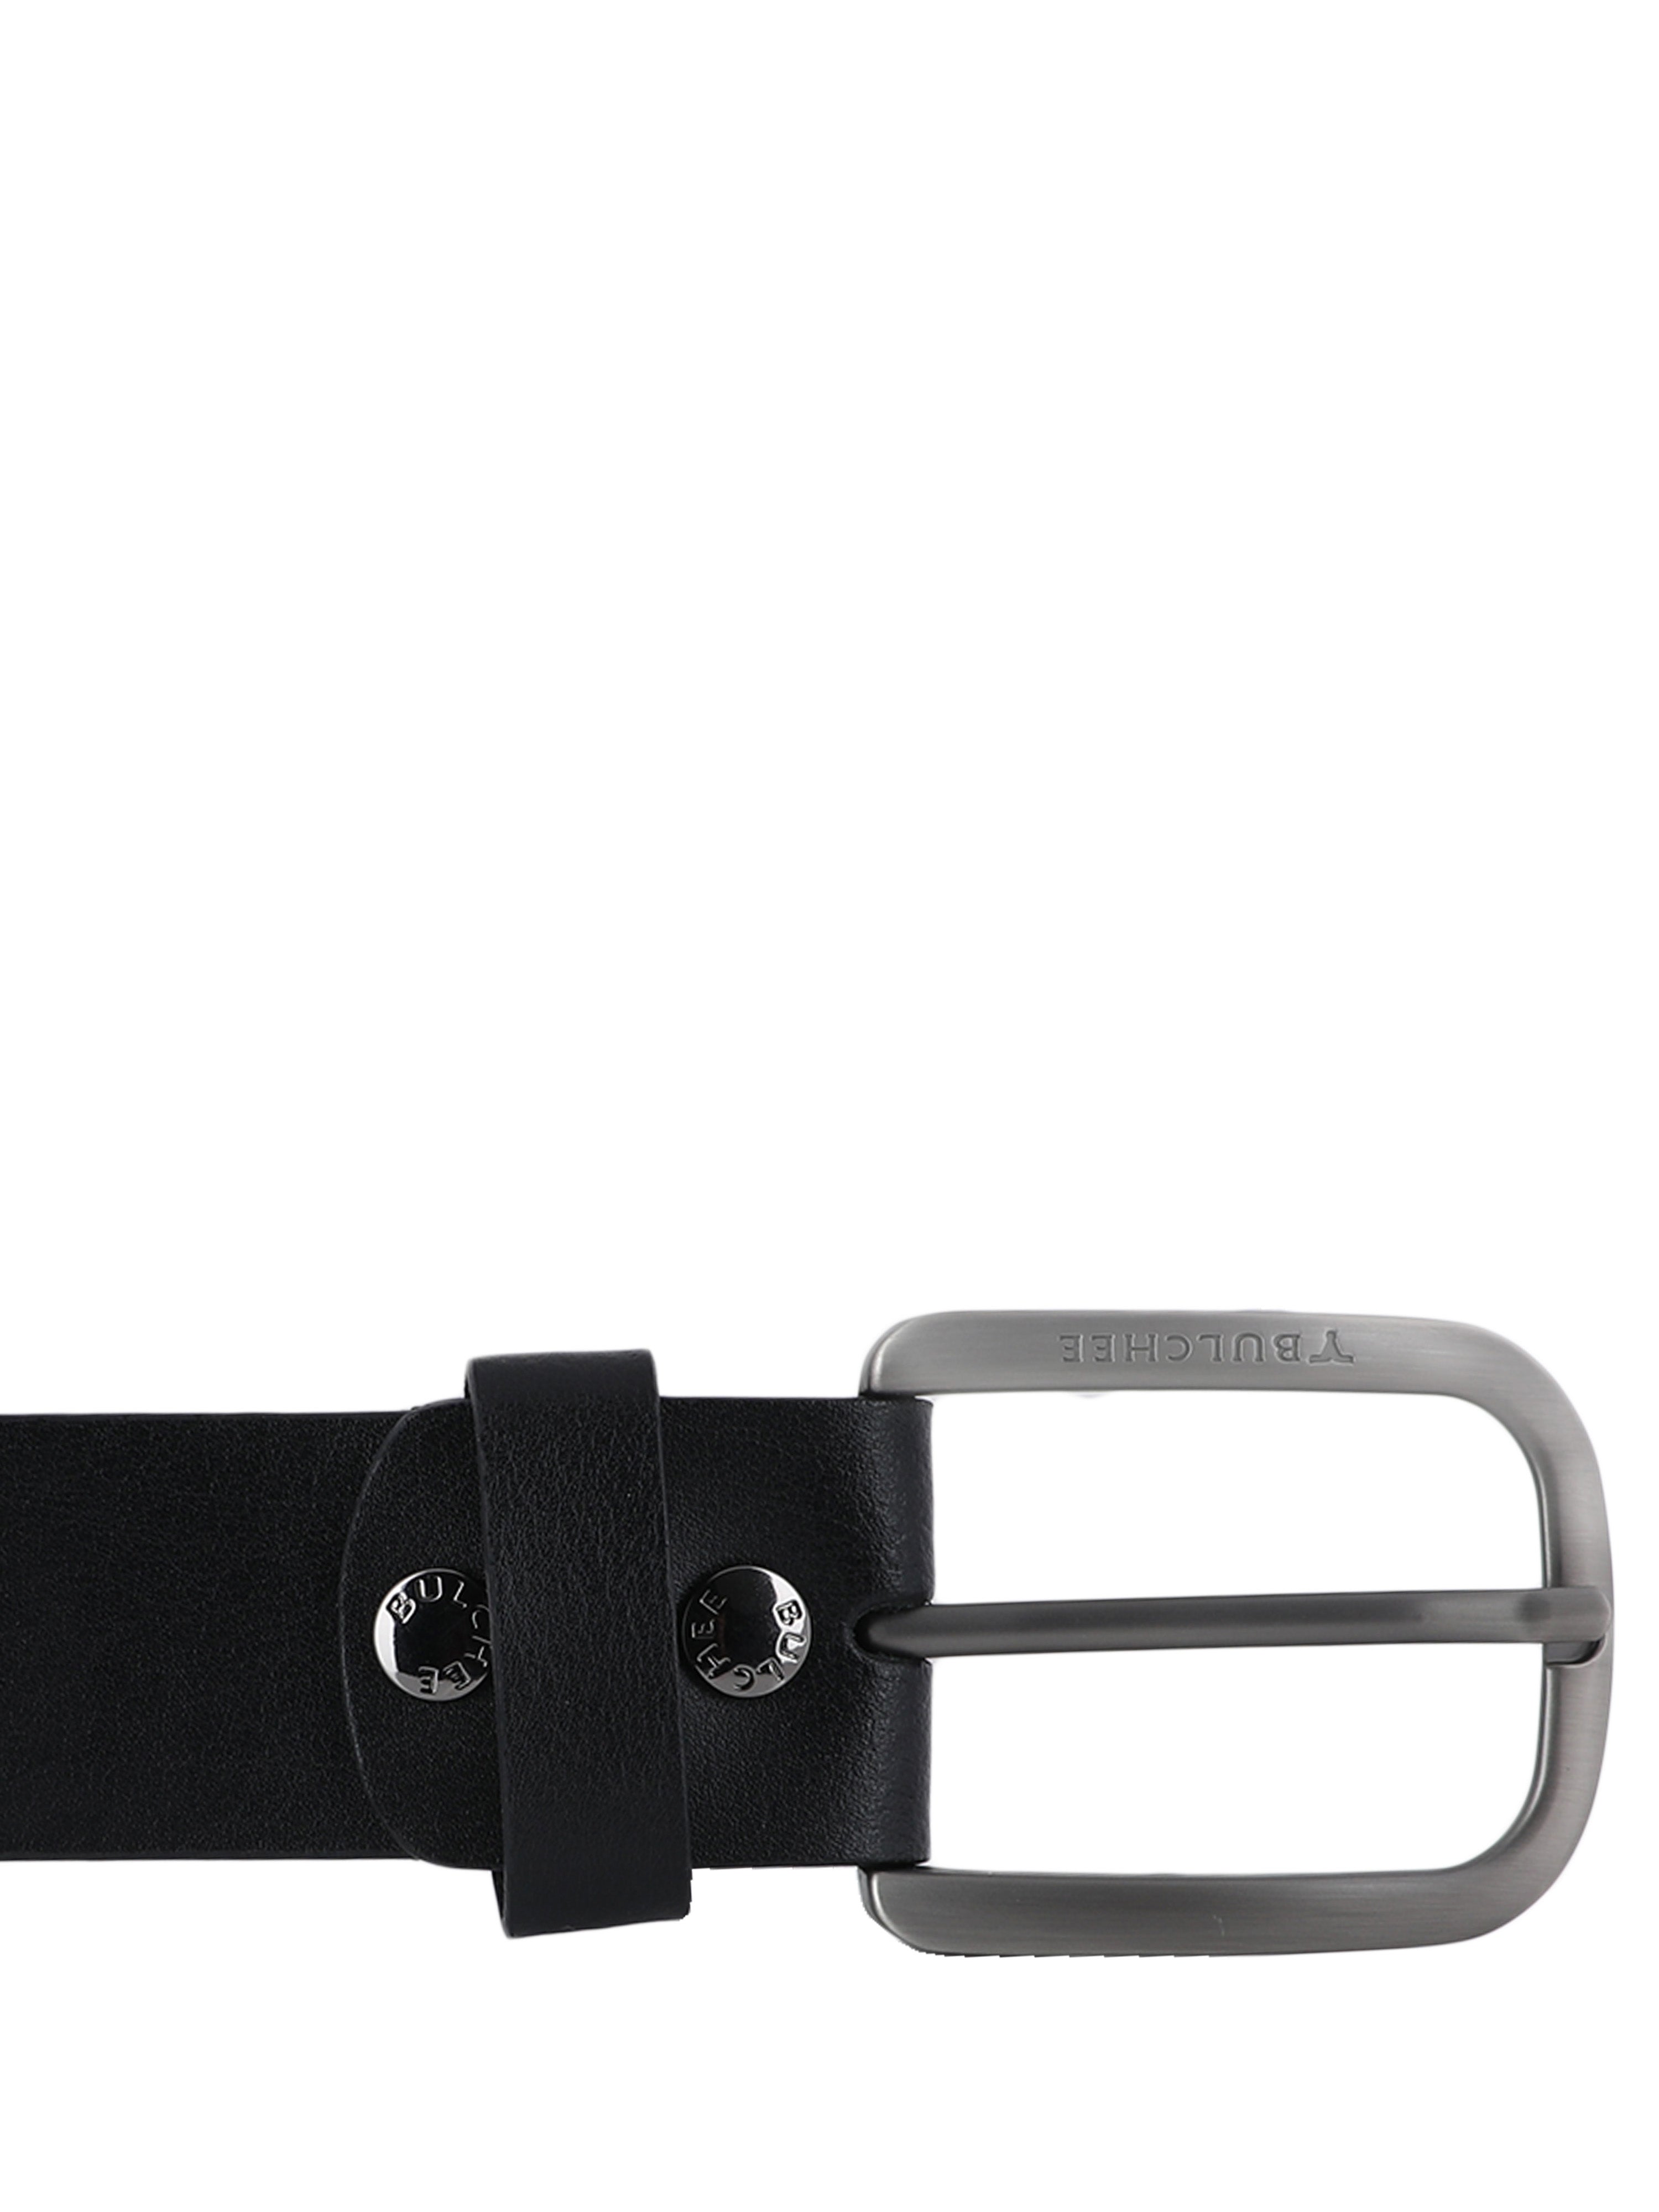 Bulchee Men's Genuine Leather Belt | Plain Jeans | Black | BUL2164B